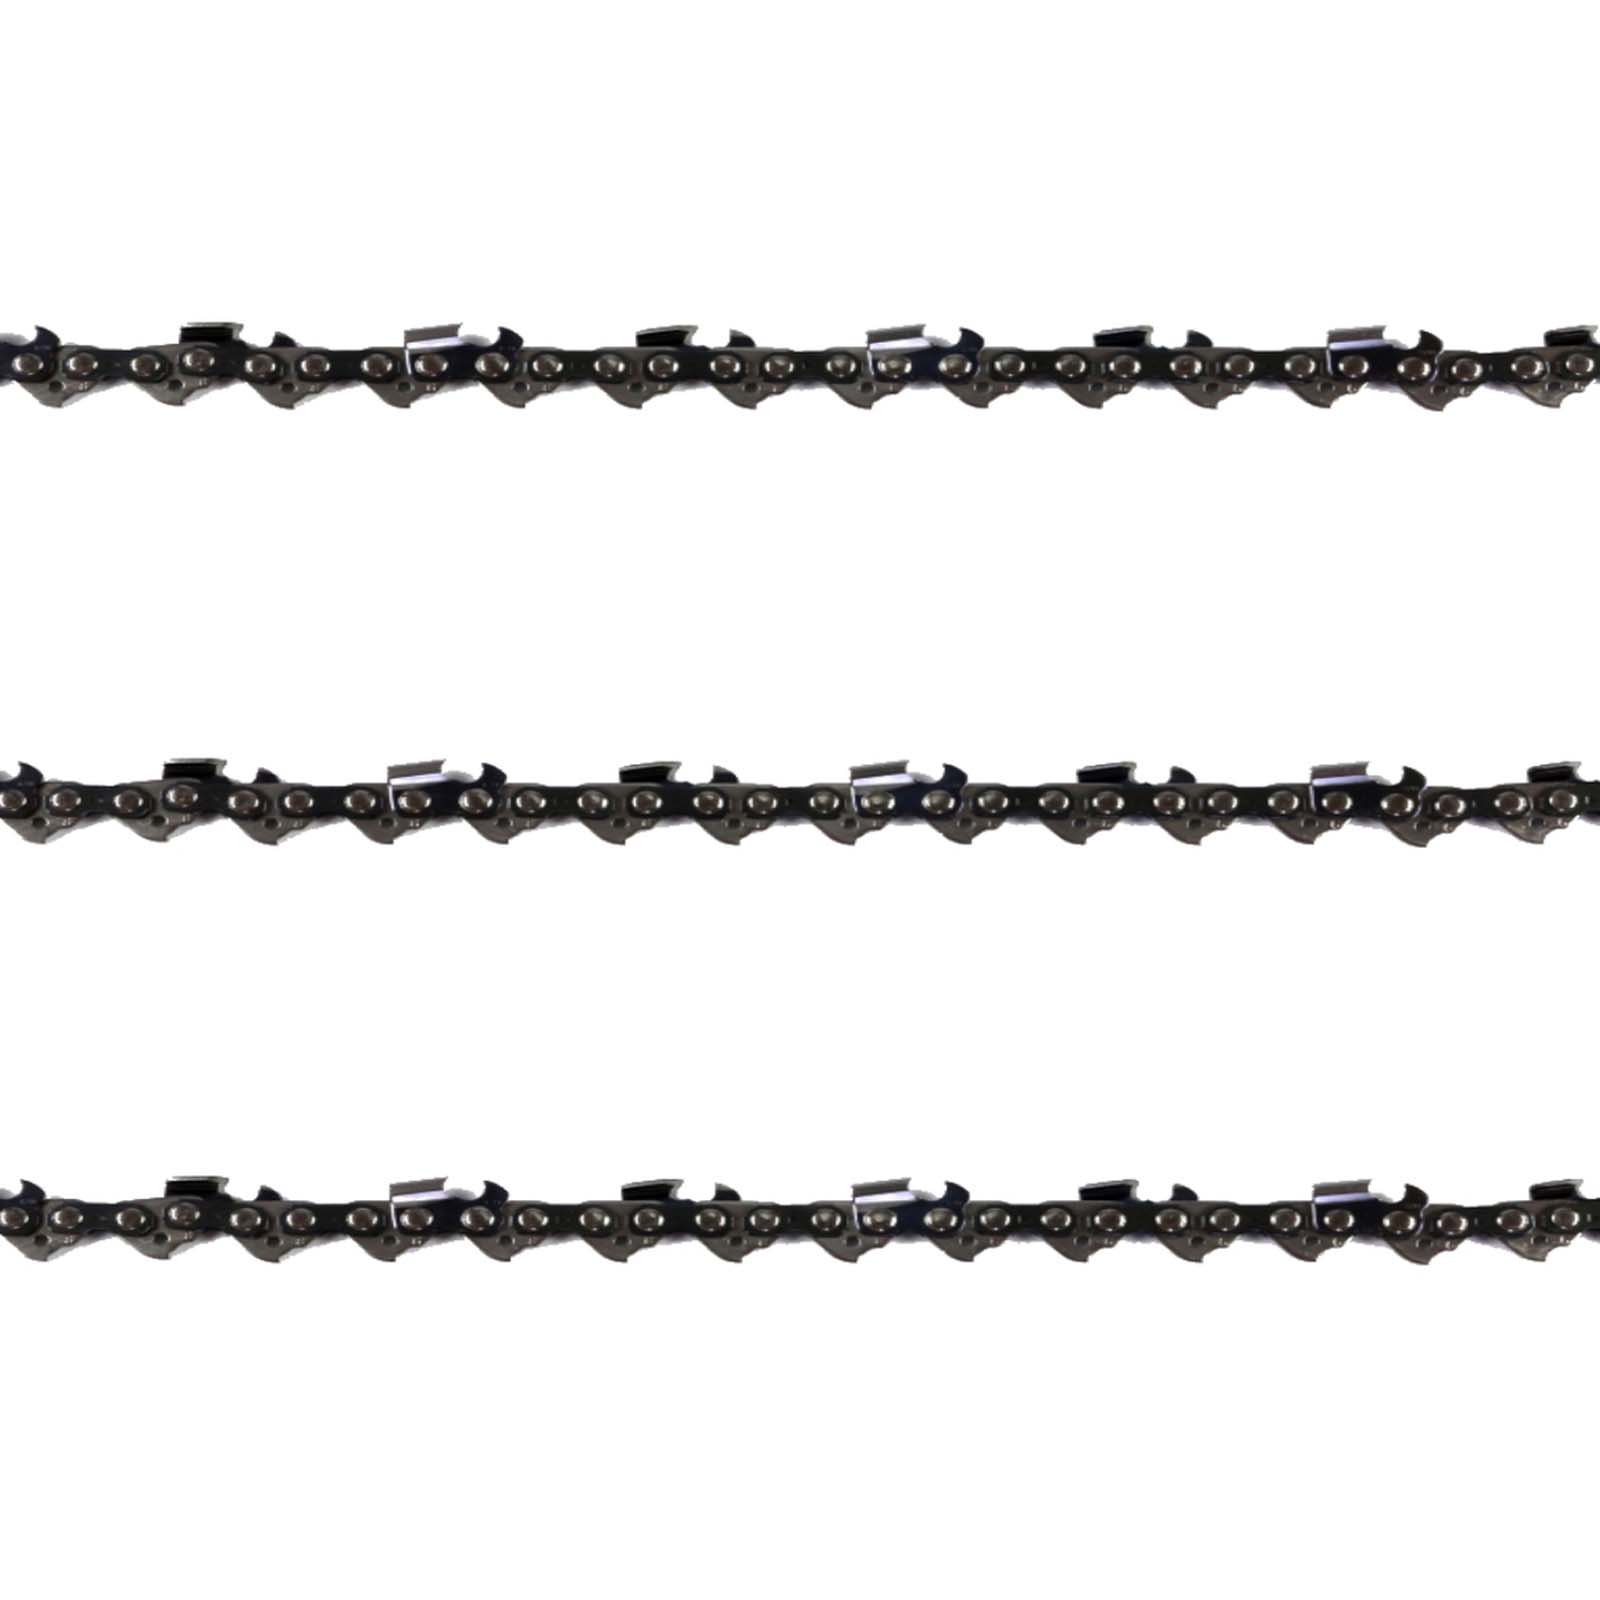 3x 3/8'' .058 84DL Semi Chisel Chainsaw Chains for Husqvarna 24'' Bar